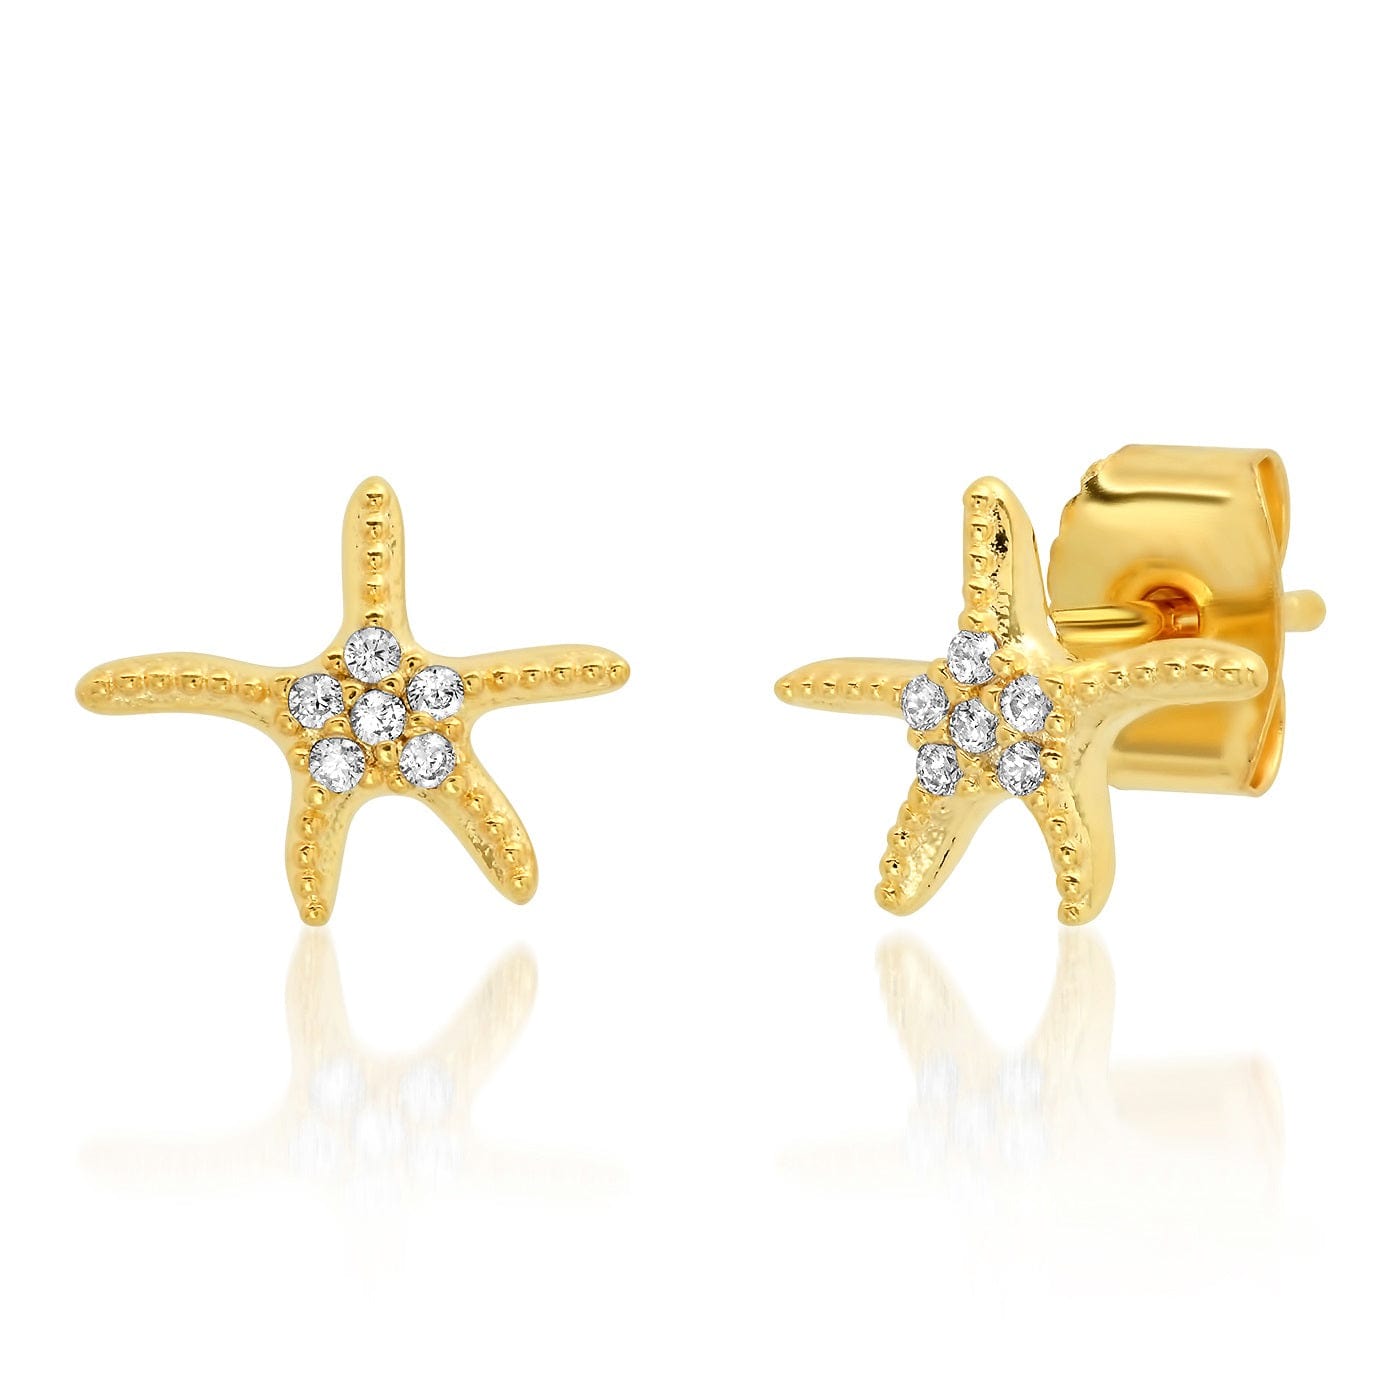 TAI JEWELRY Earrings Starfish Studs